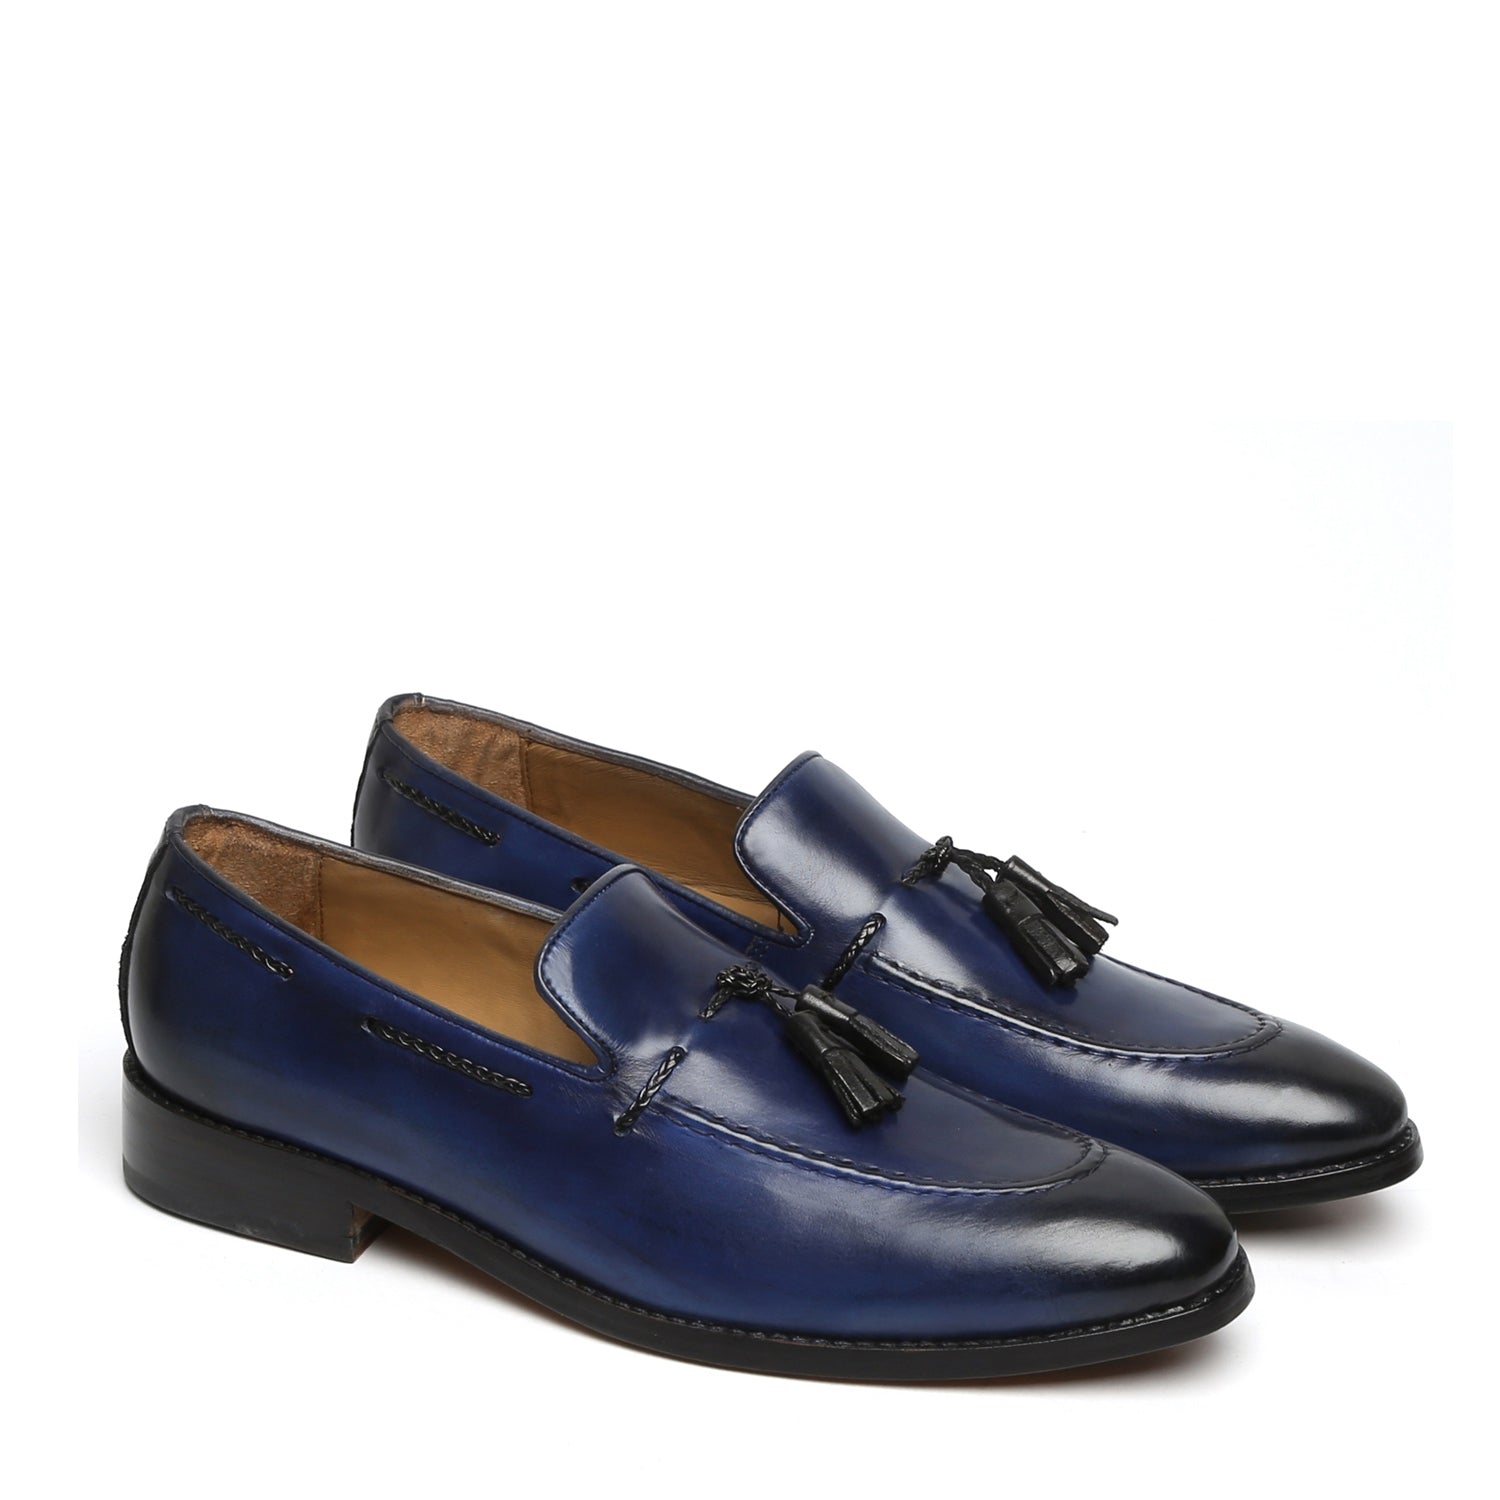 Side Lacing Tassel Loafers in Navy Blue Genuine Leather By Brune & Bareskin